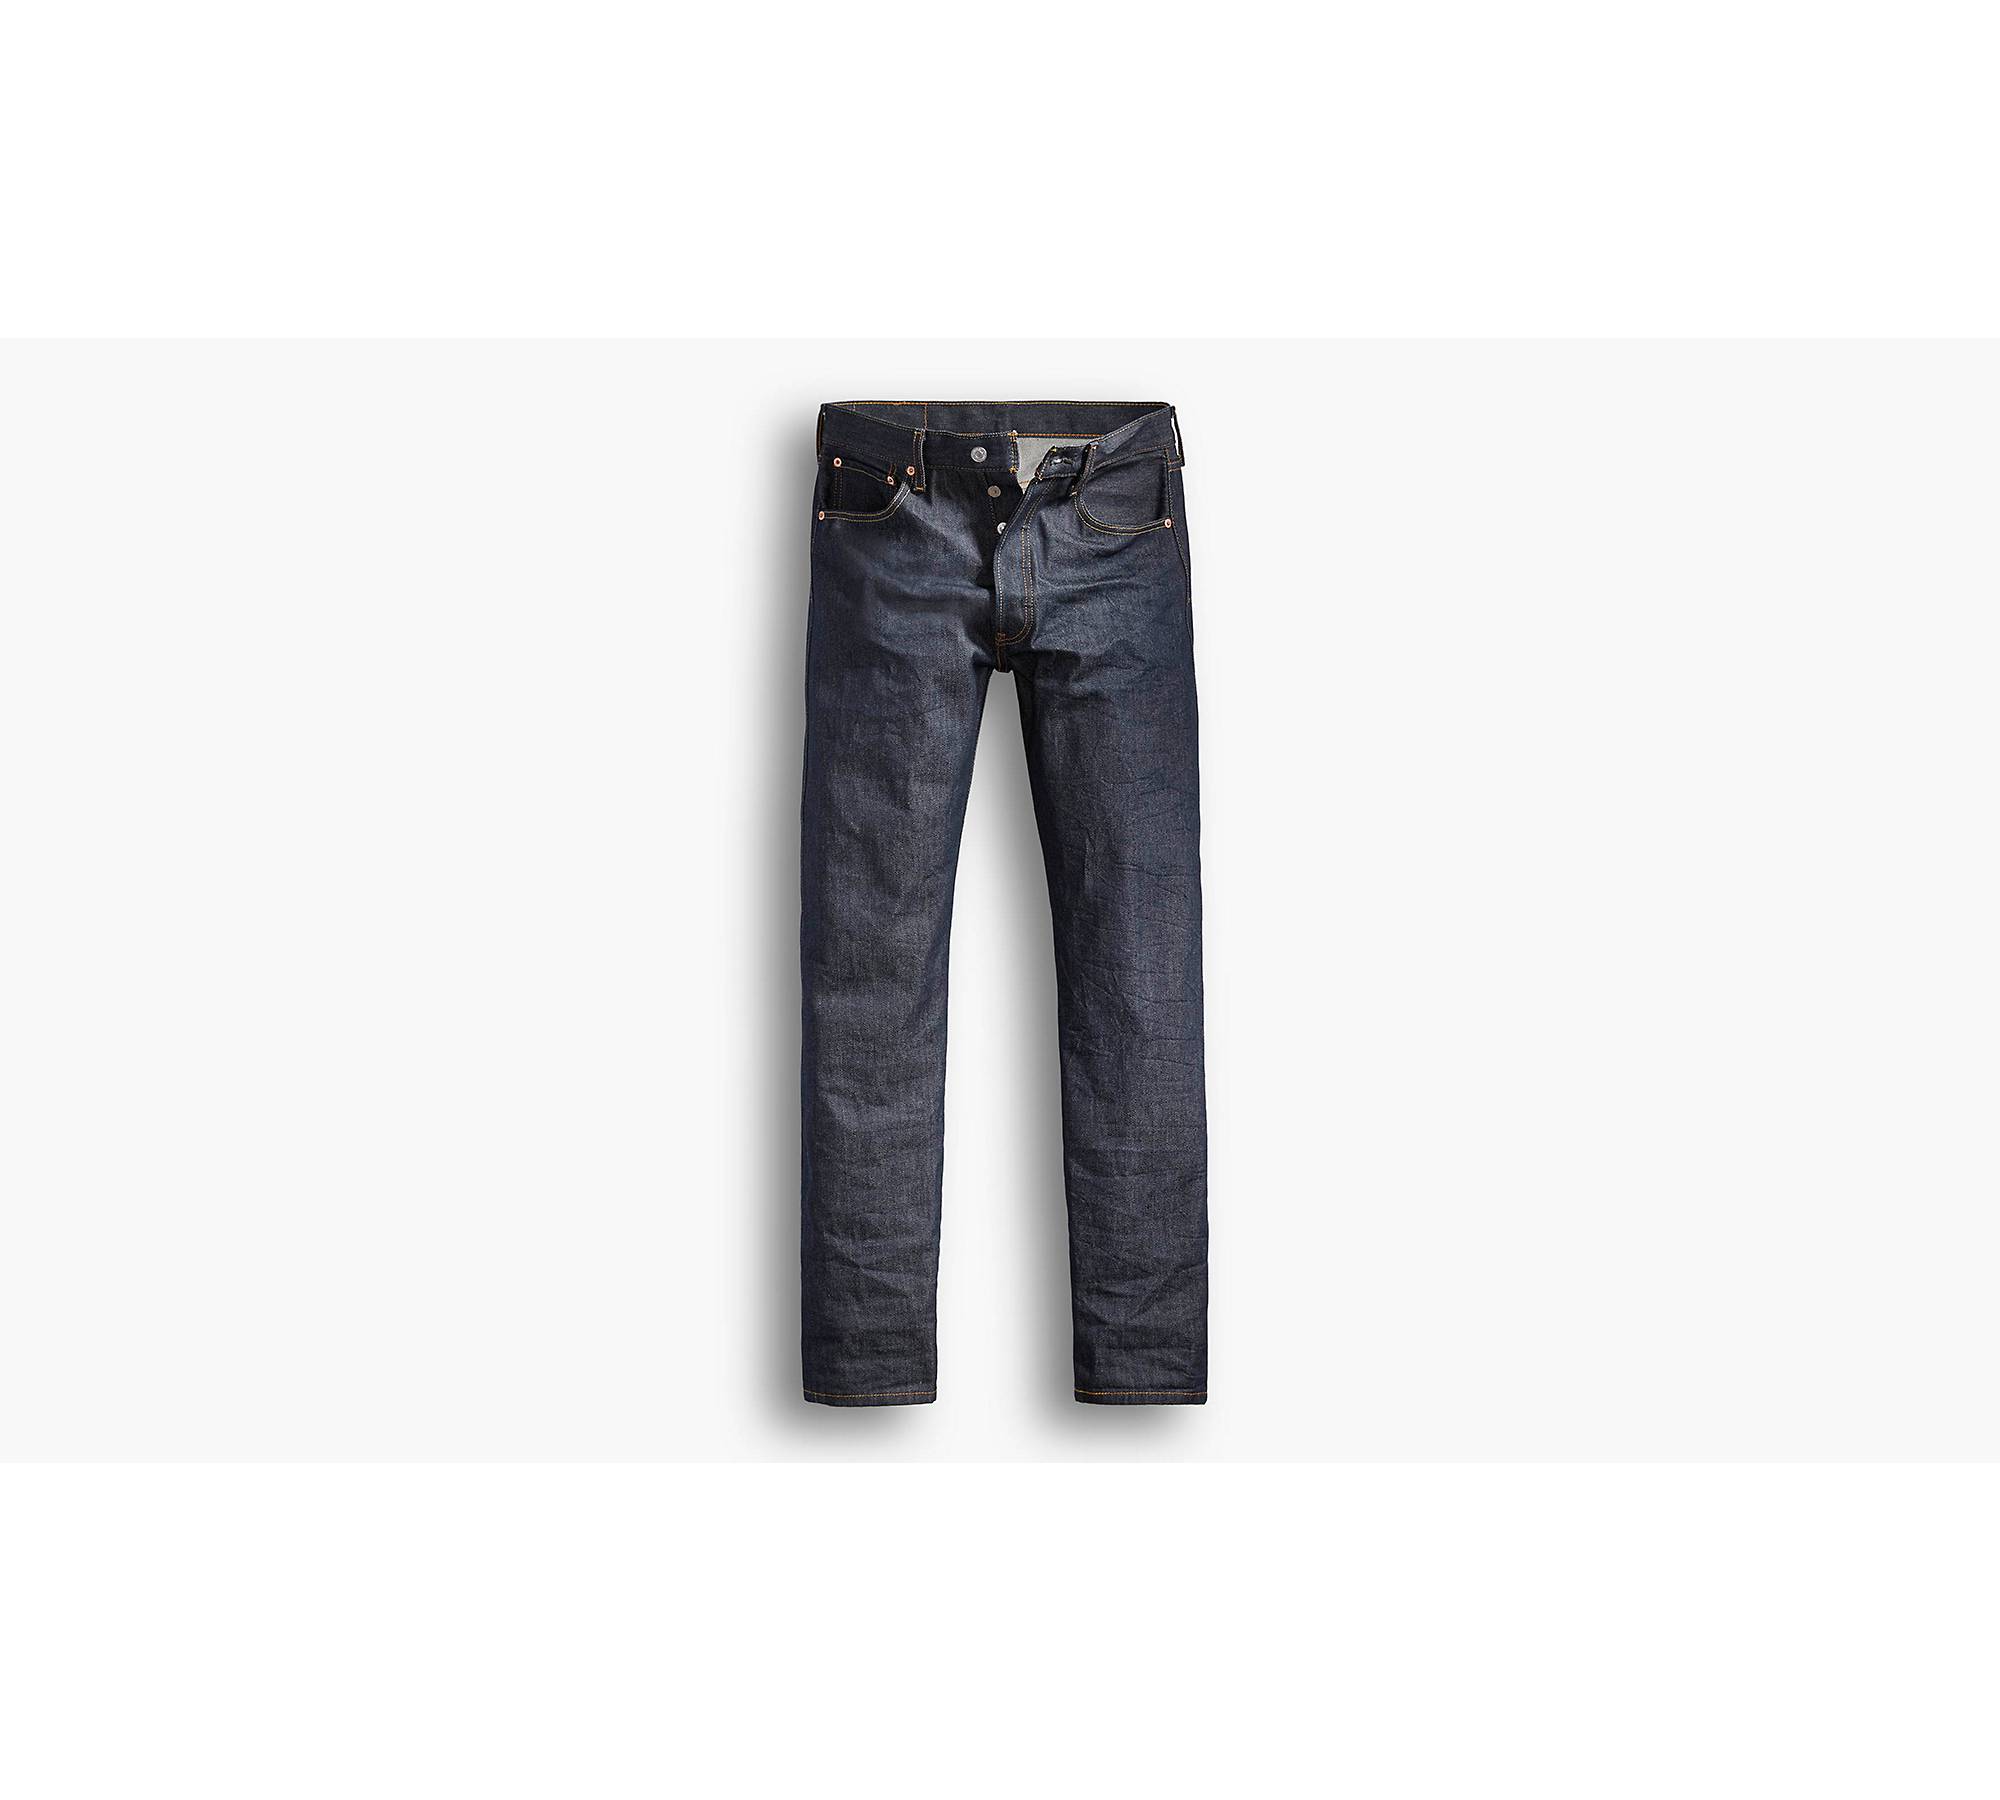 Levi's 501 Black Button Fly Straight Fit Denim Jeans Mens Size 36x30 -  beyond exchange